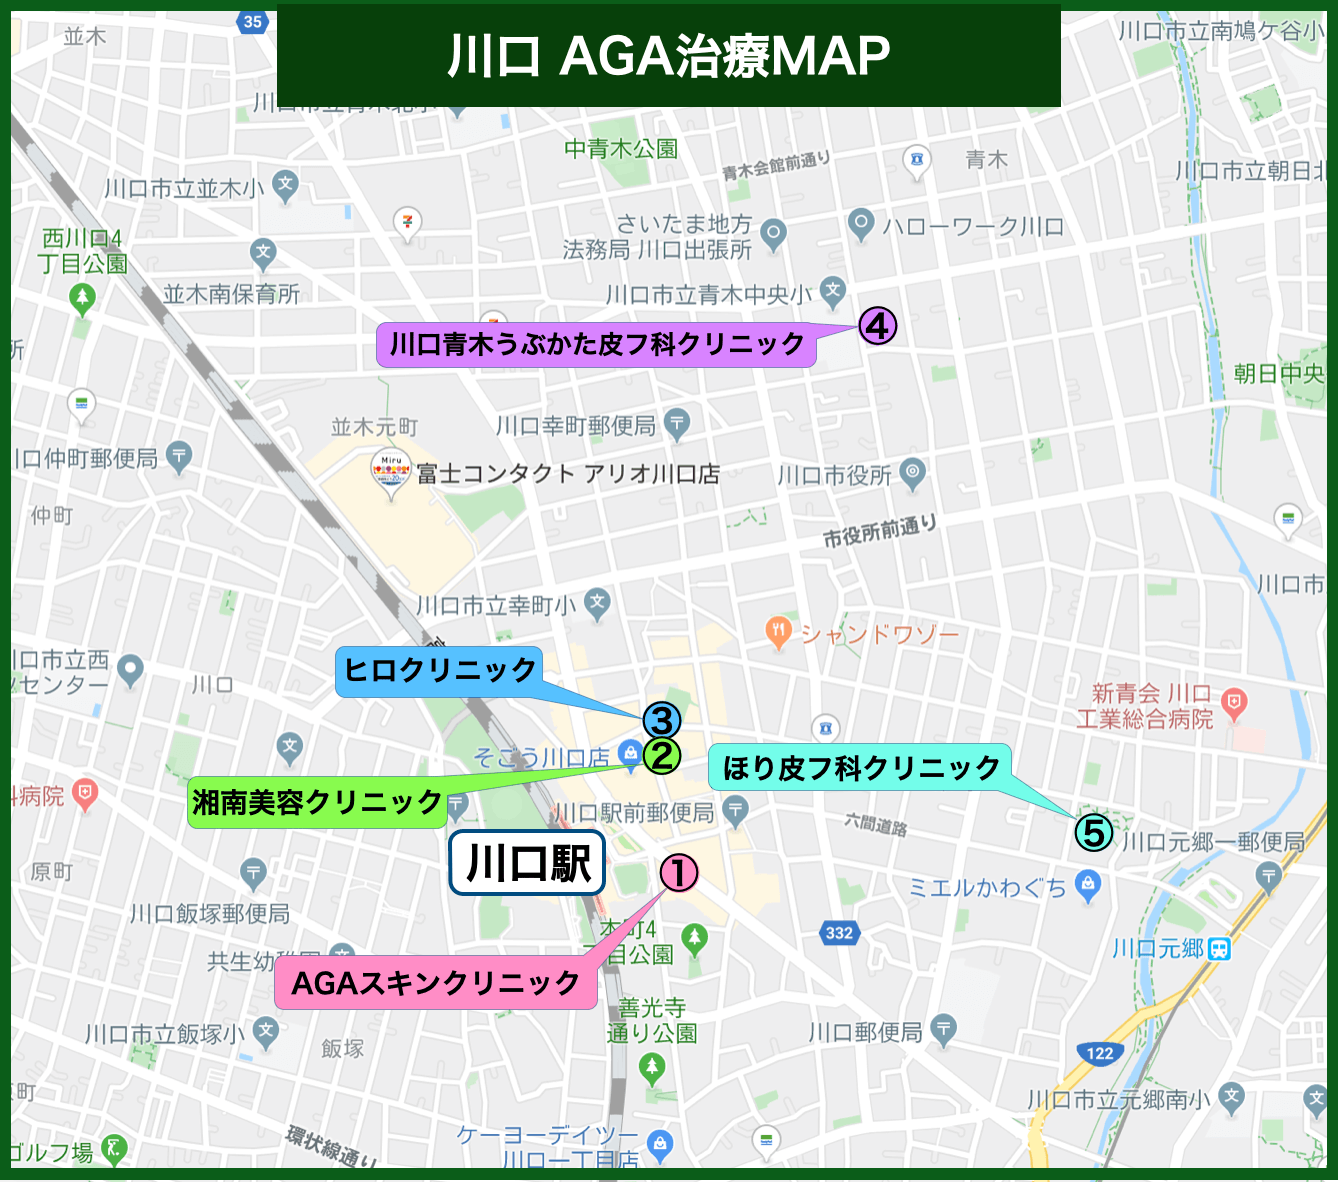 川口 AGA治療MAP